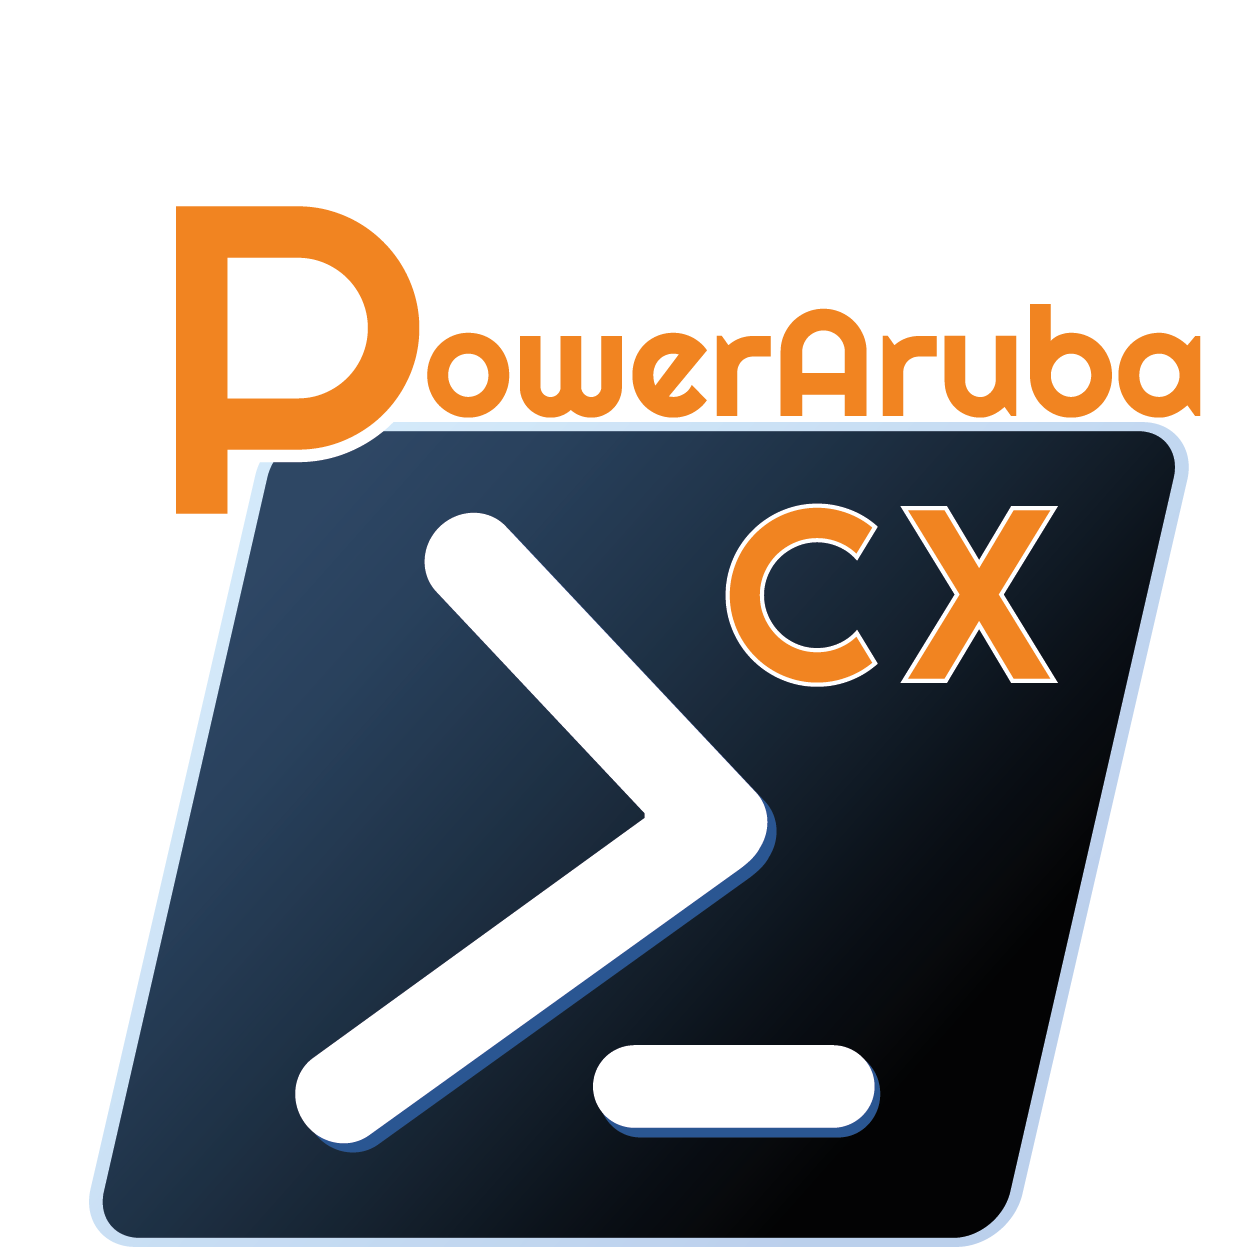 PowerArubaCX icon